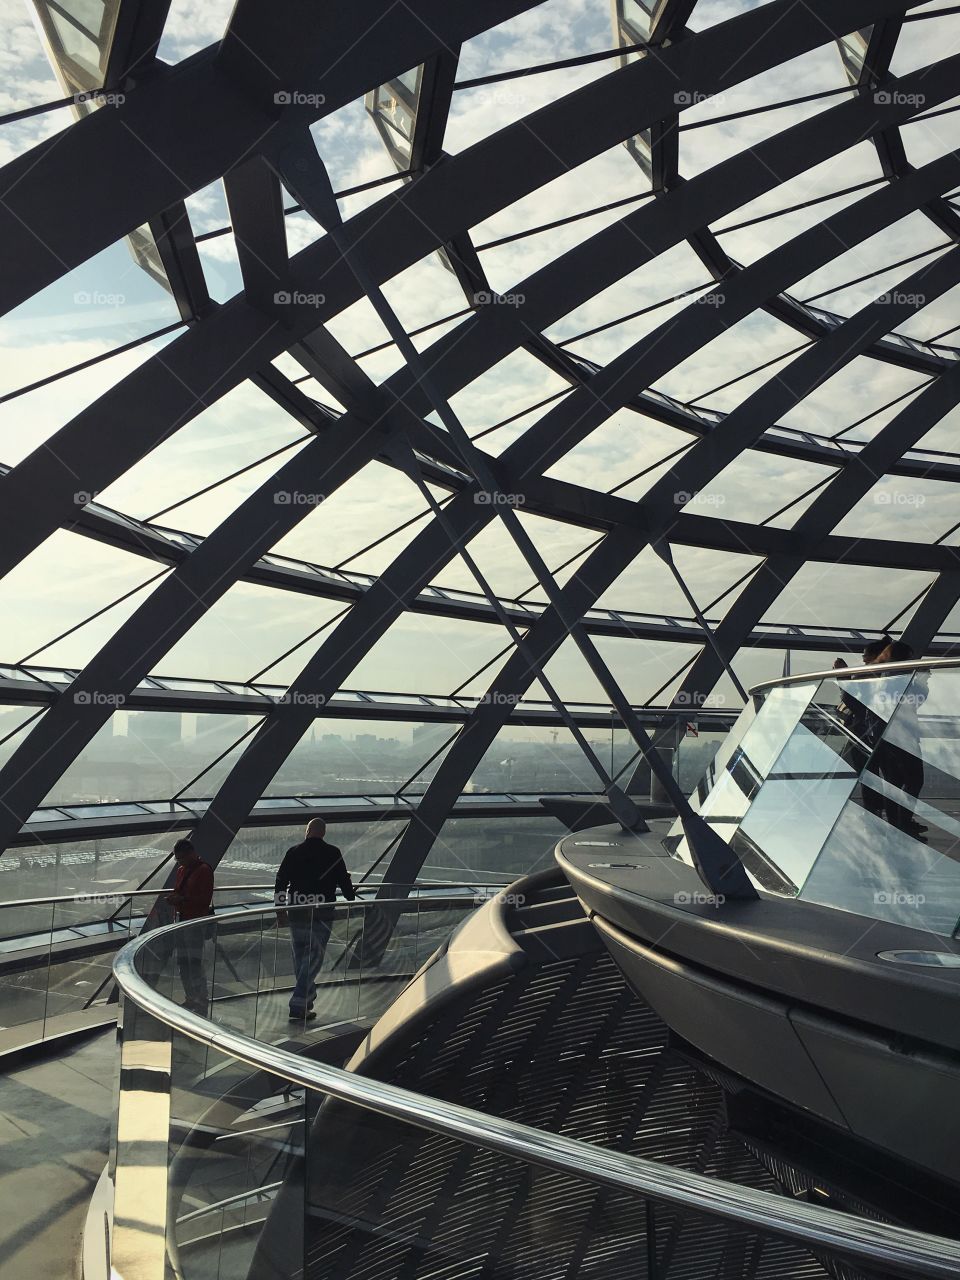 Spiral ramp walkway inside glass dome in Germany’s capital. 